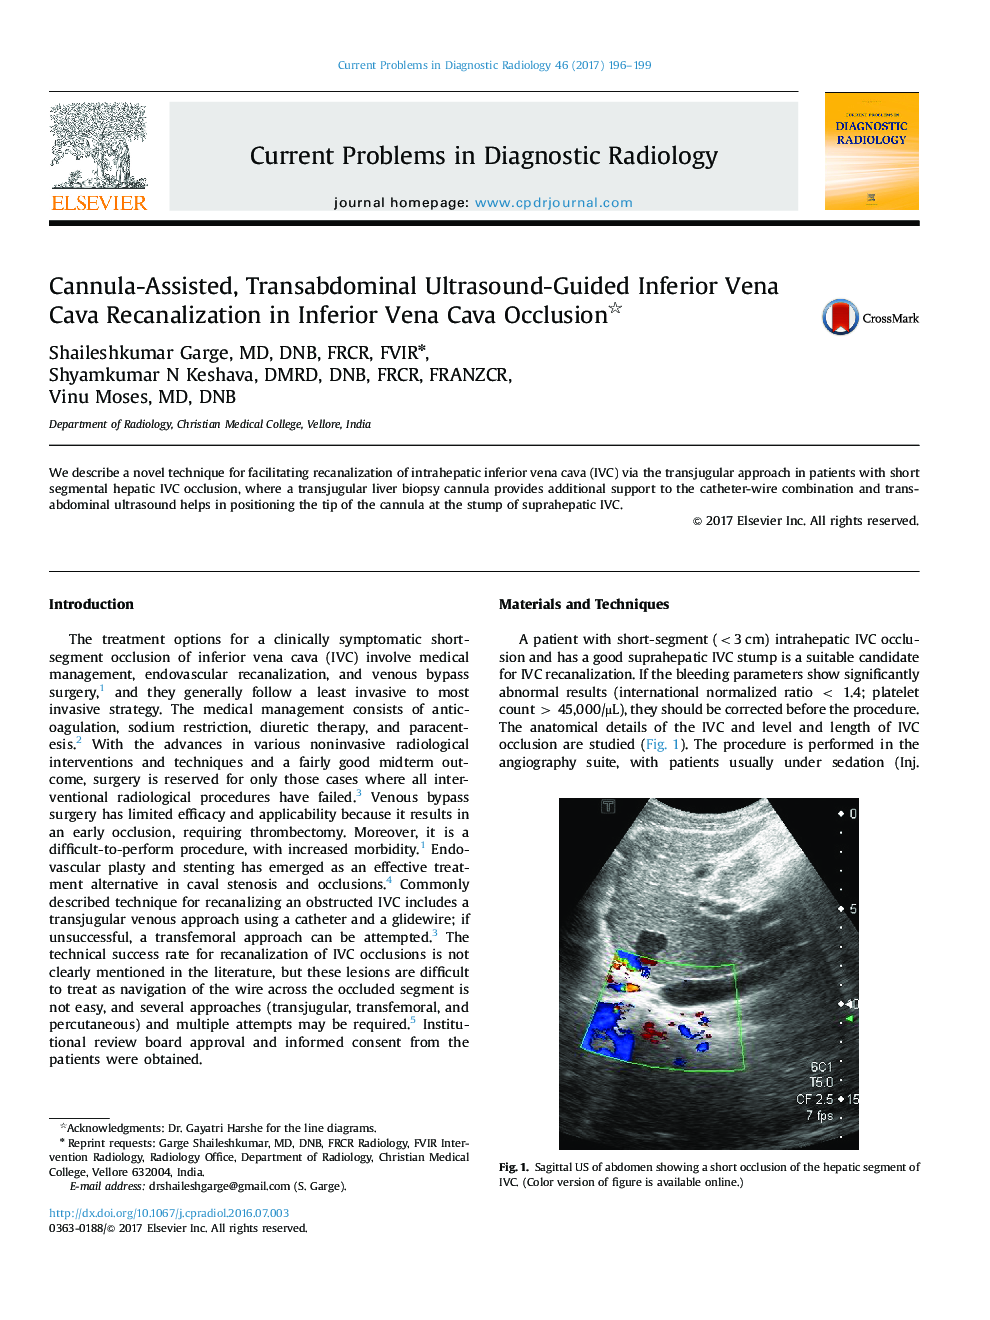 Cannula-Assisted, Transabdominal Ultrasound-Guided Inferior Vena Cava Recanalization in Inferior Vena Cava Occlusion